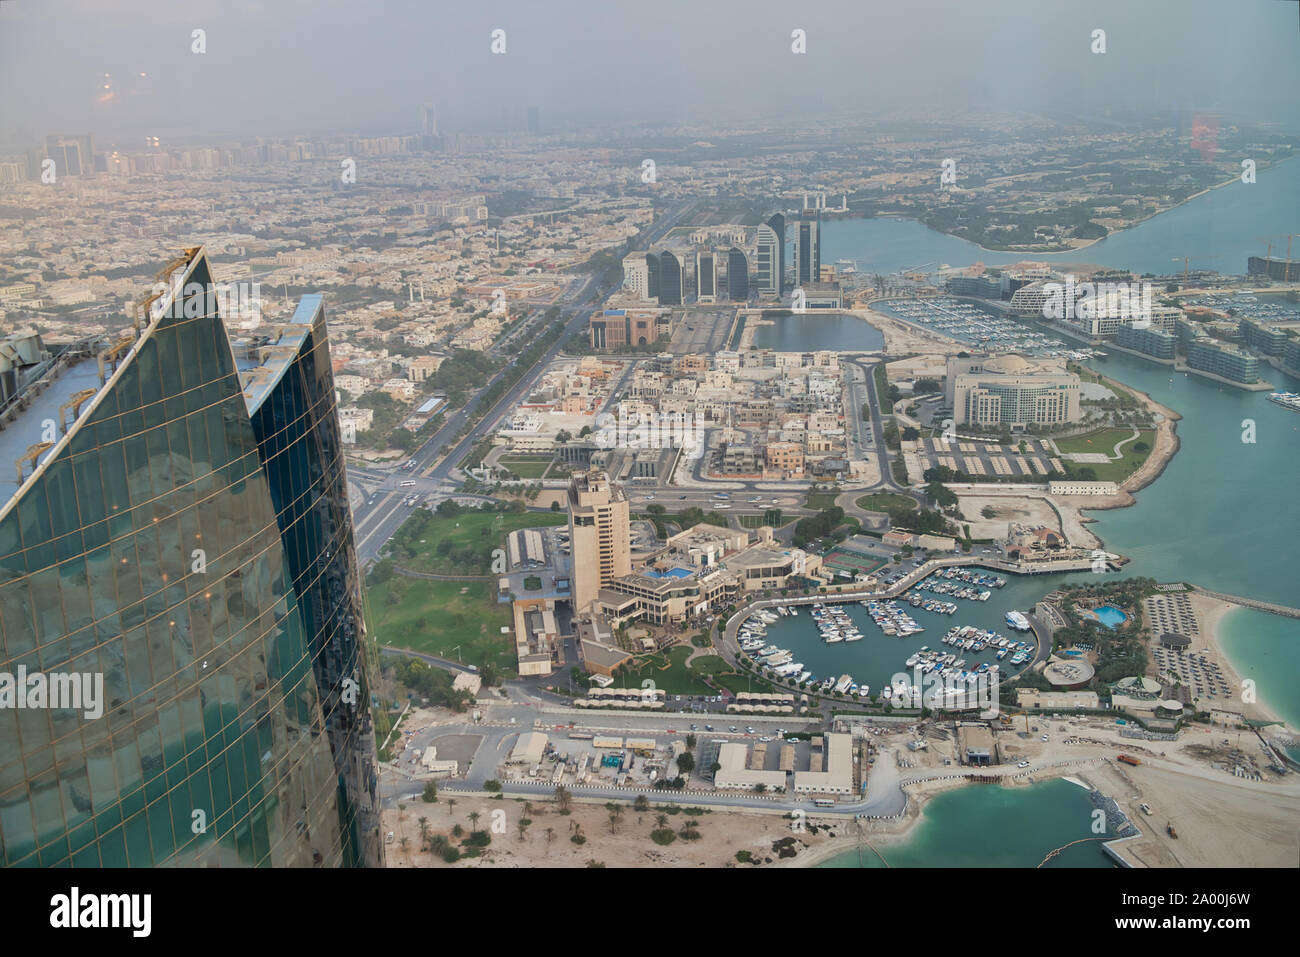 Aerial view of modern city skyline with King Abdullah Bin Abdulaziz Al Saud Street, Abu Dhabi, United Arab Emirates. Stock Photo